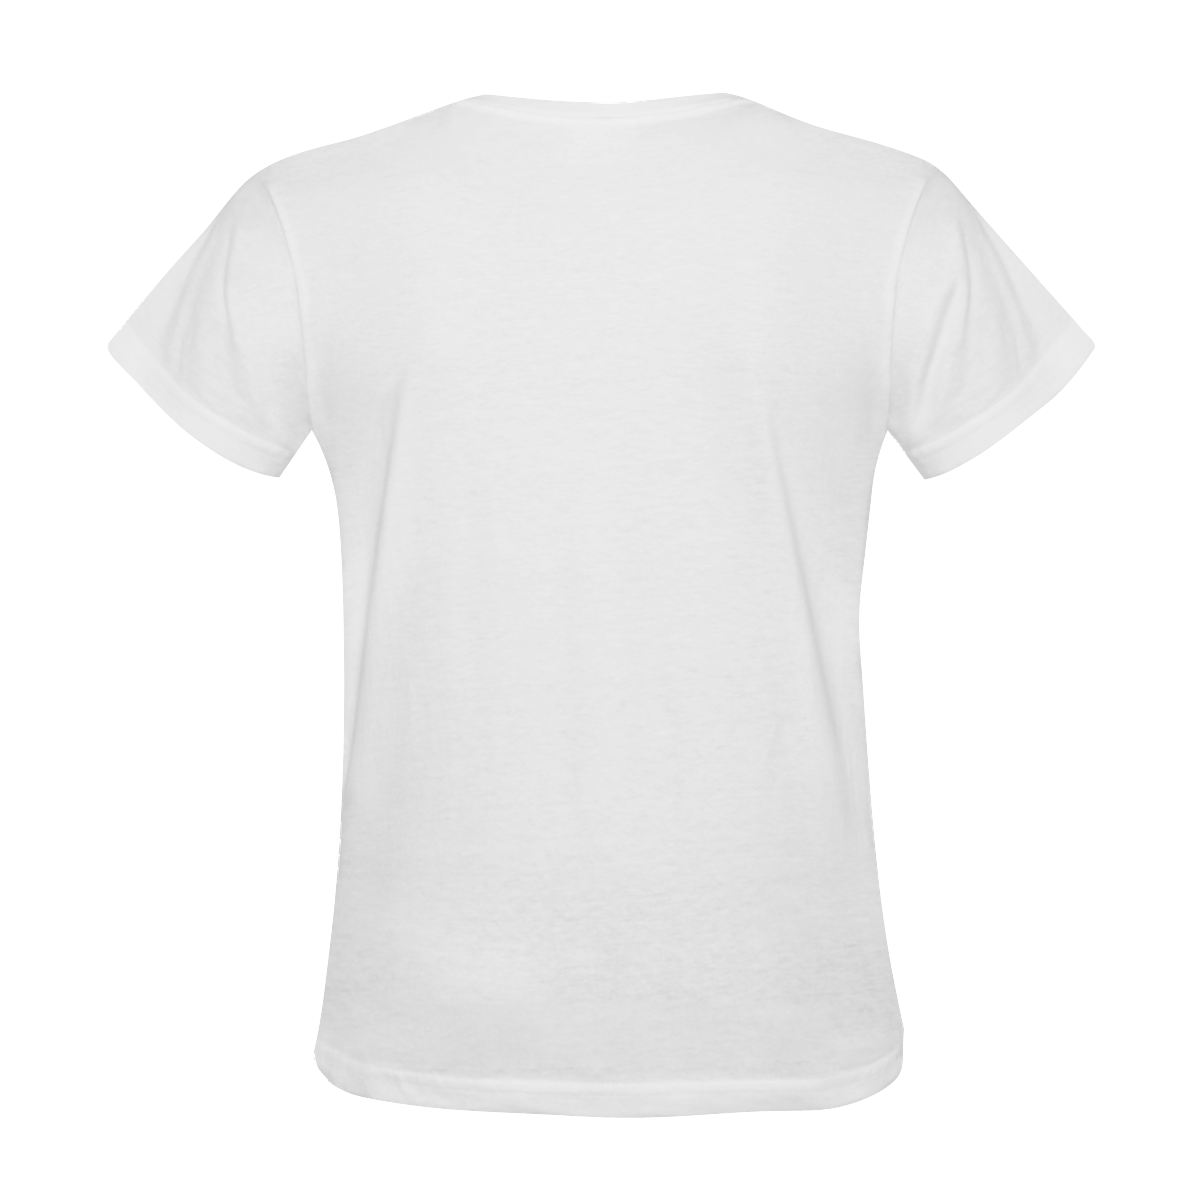 Unicorn Skull White Women's T-Shirt in USA Size (Two Sides Printing)